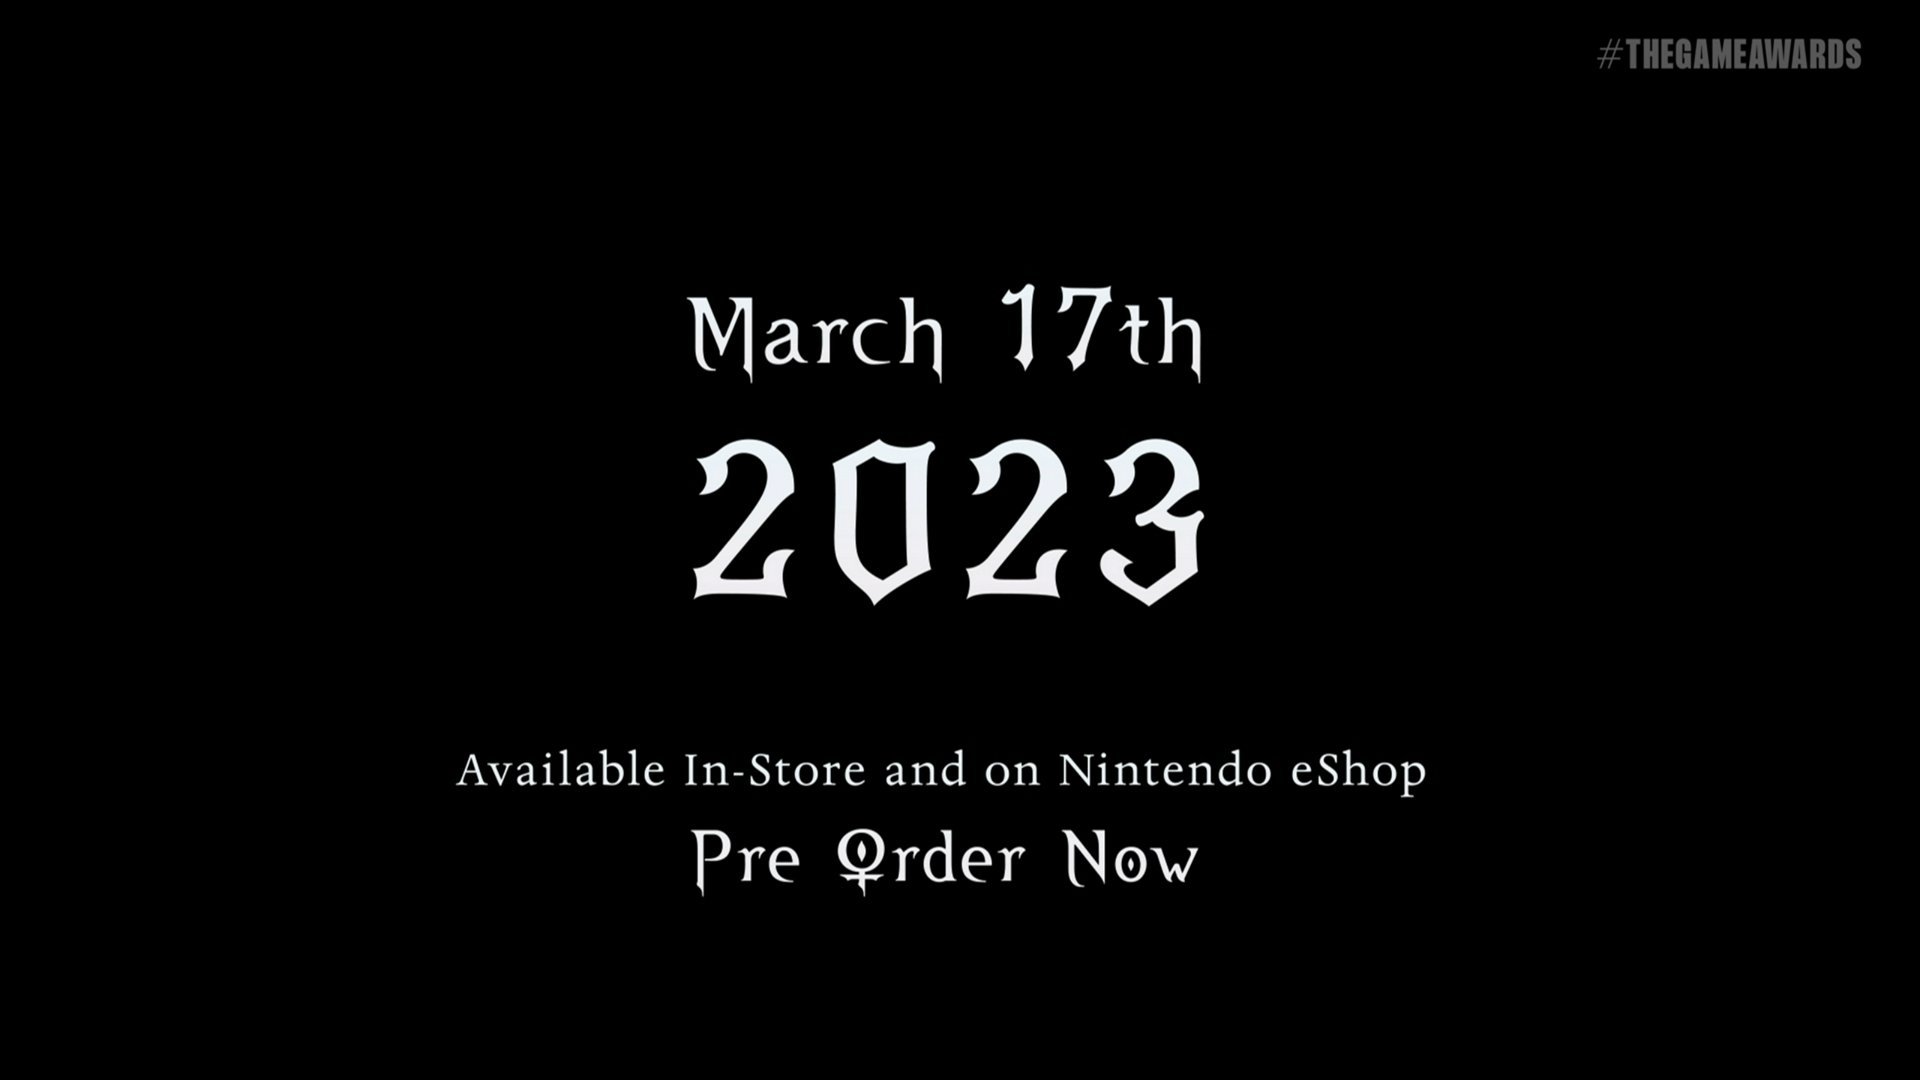 TGA2022《魔兵驚天錄起源》將於2023年3月17日發售